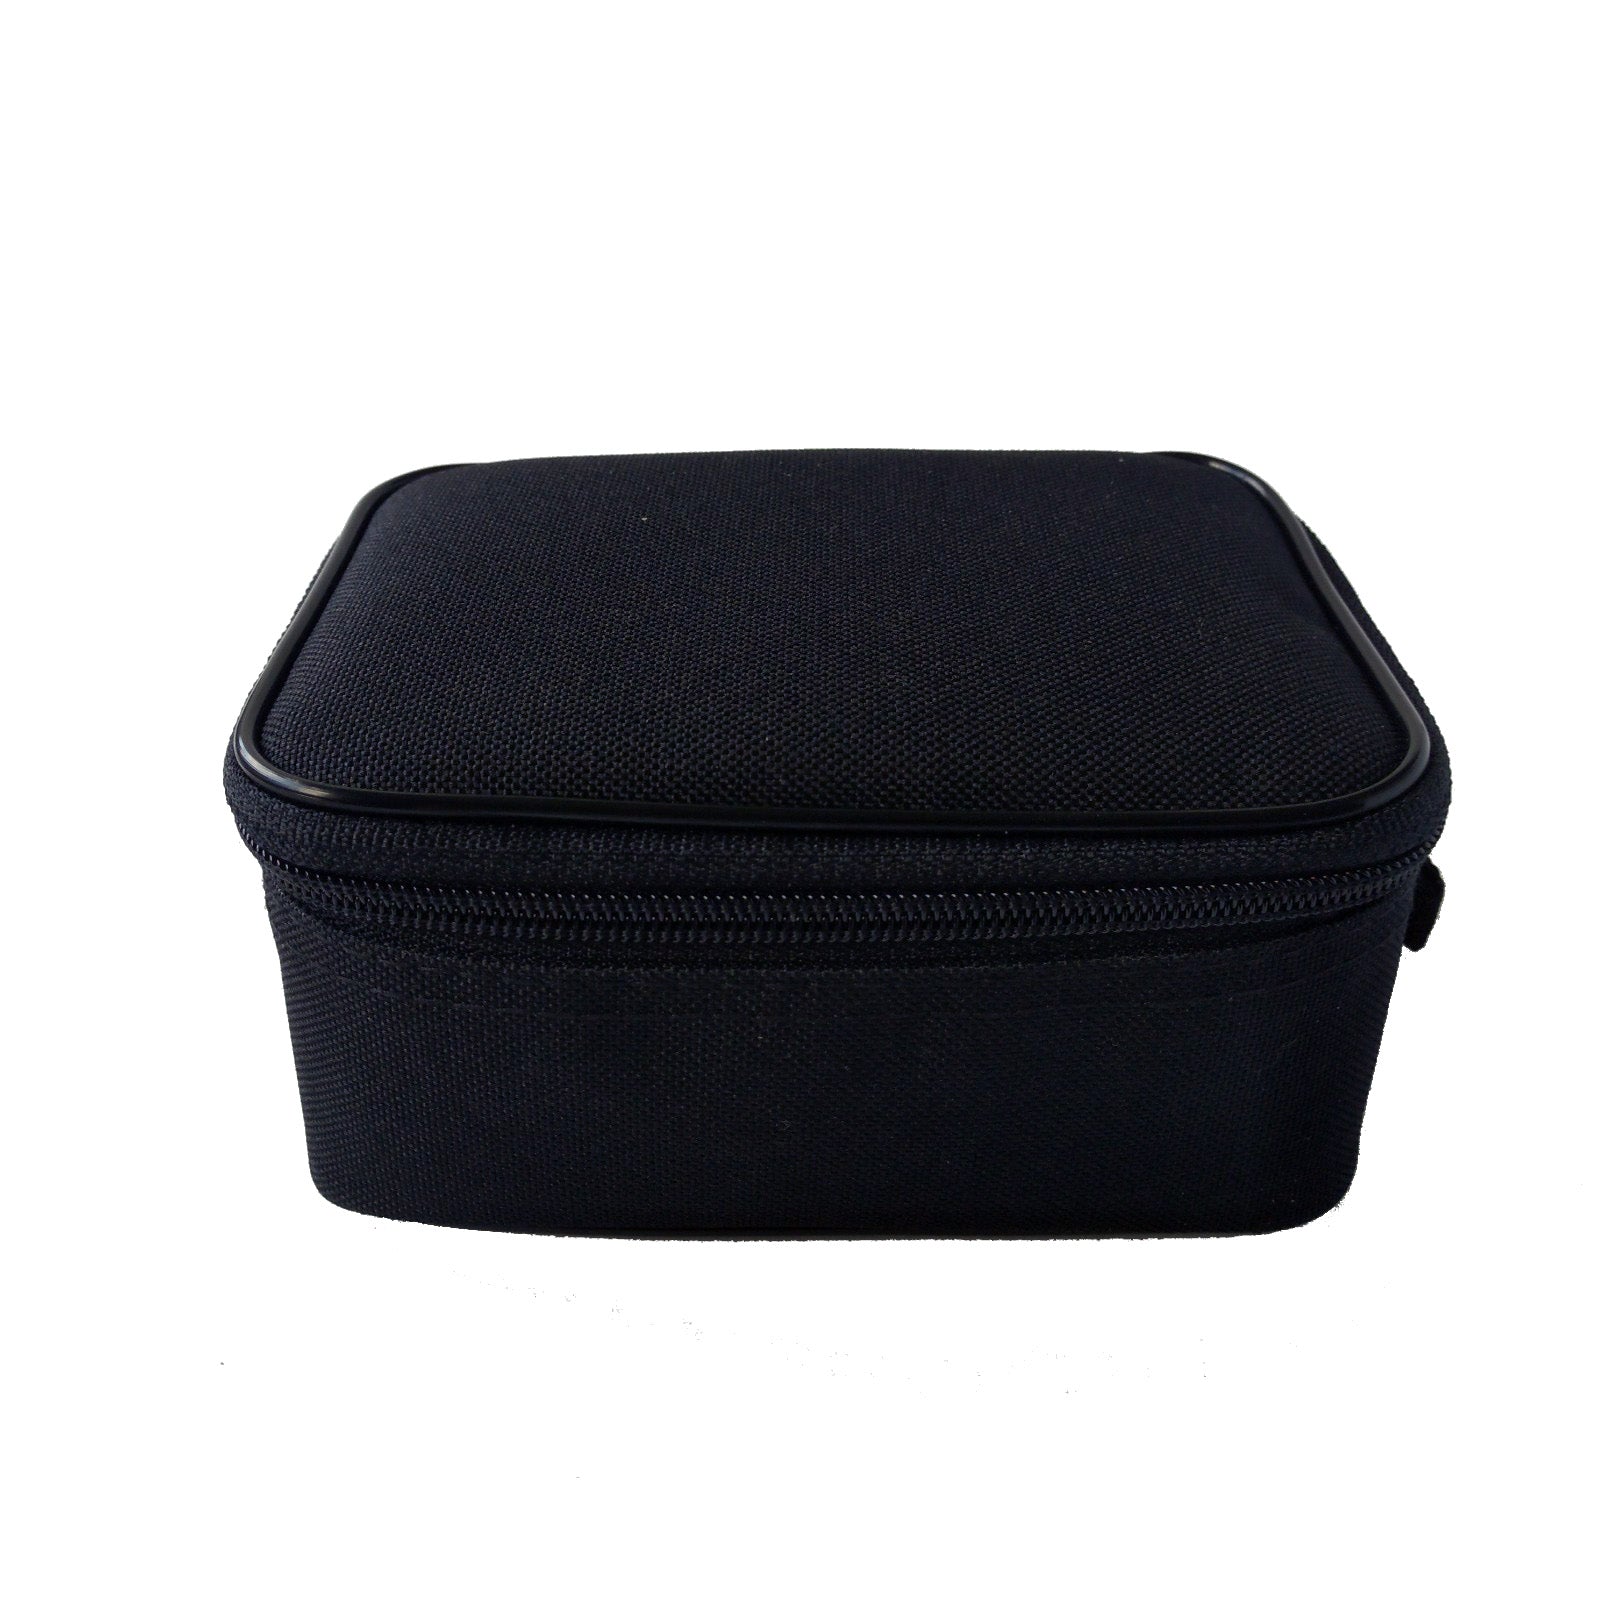 Black nylon zipper case for The Motoflator and accessories